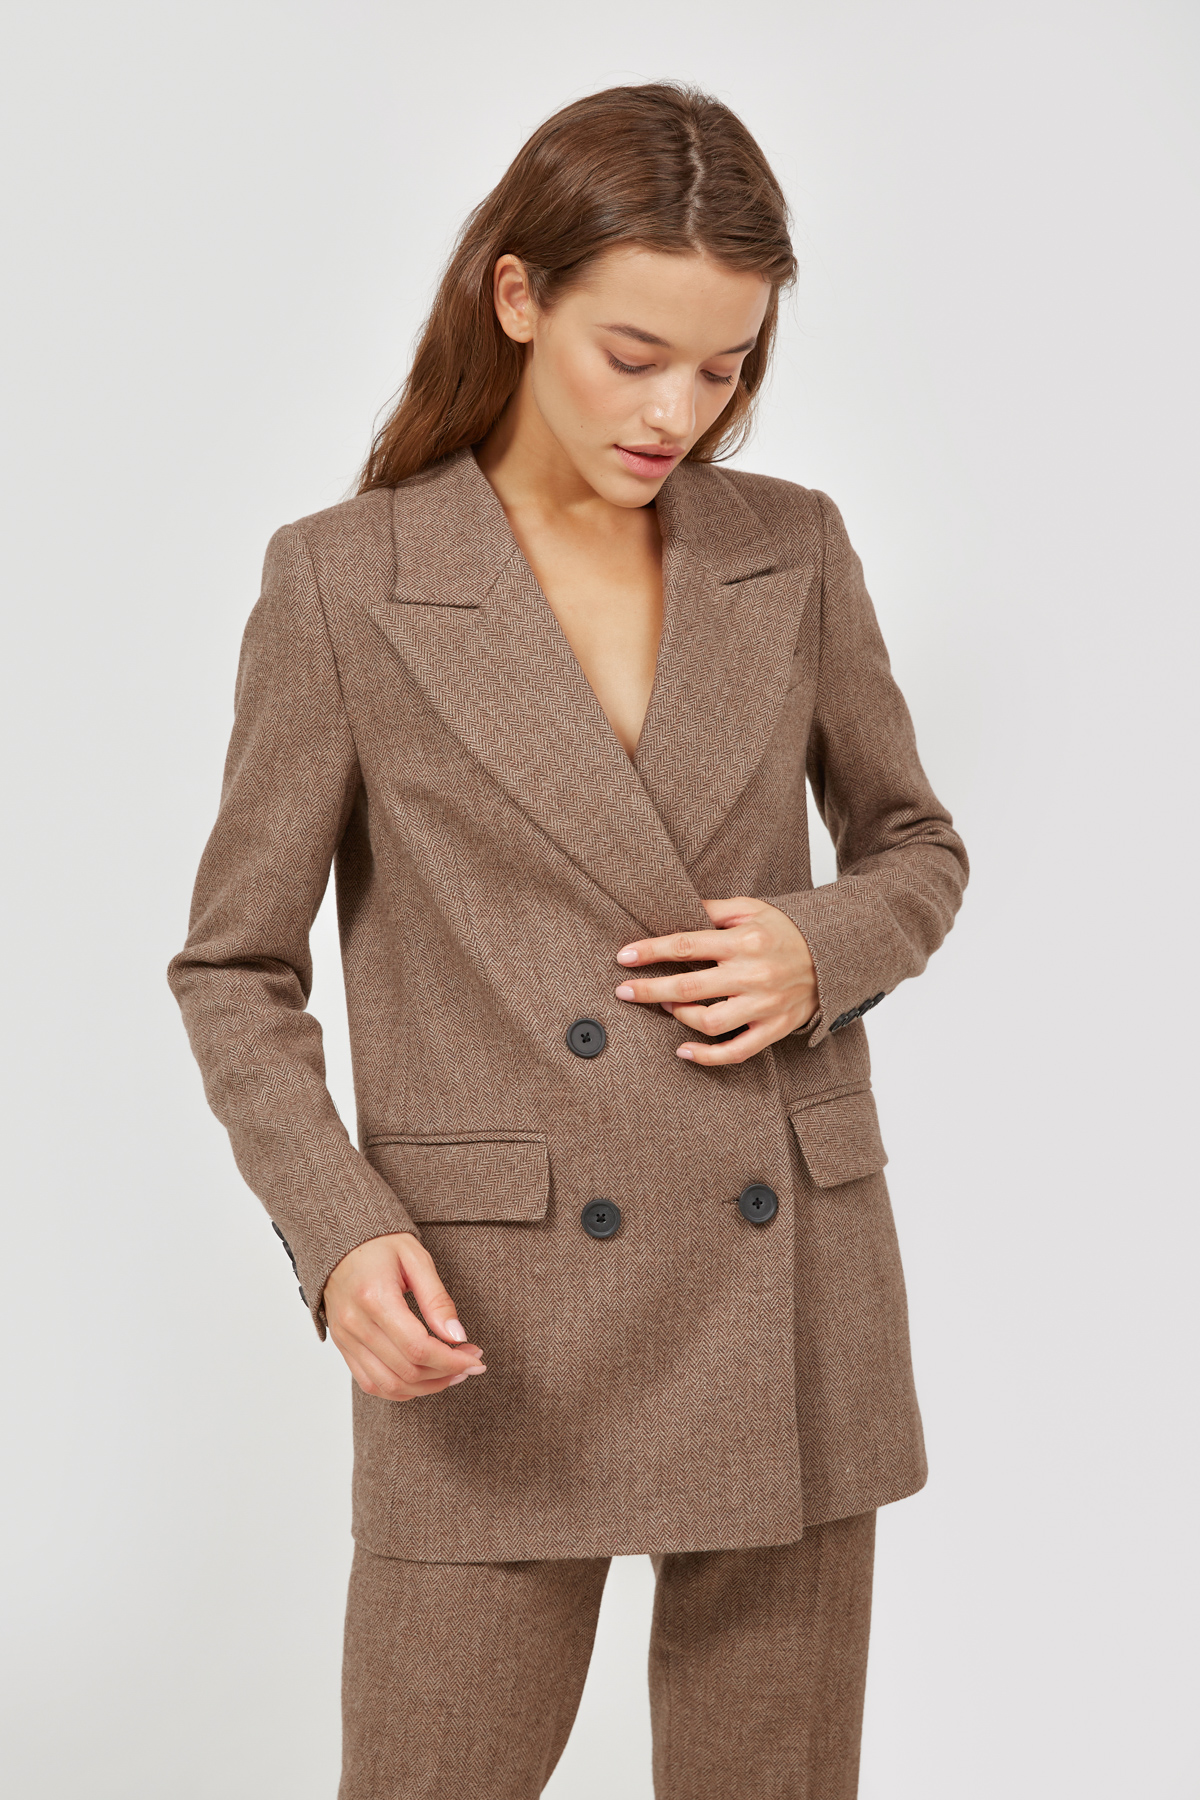 Double-breasted jacket with wool in brown herringbone print, photo 4